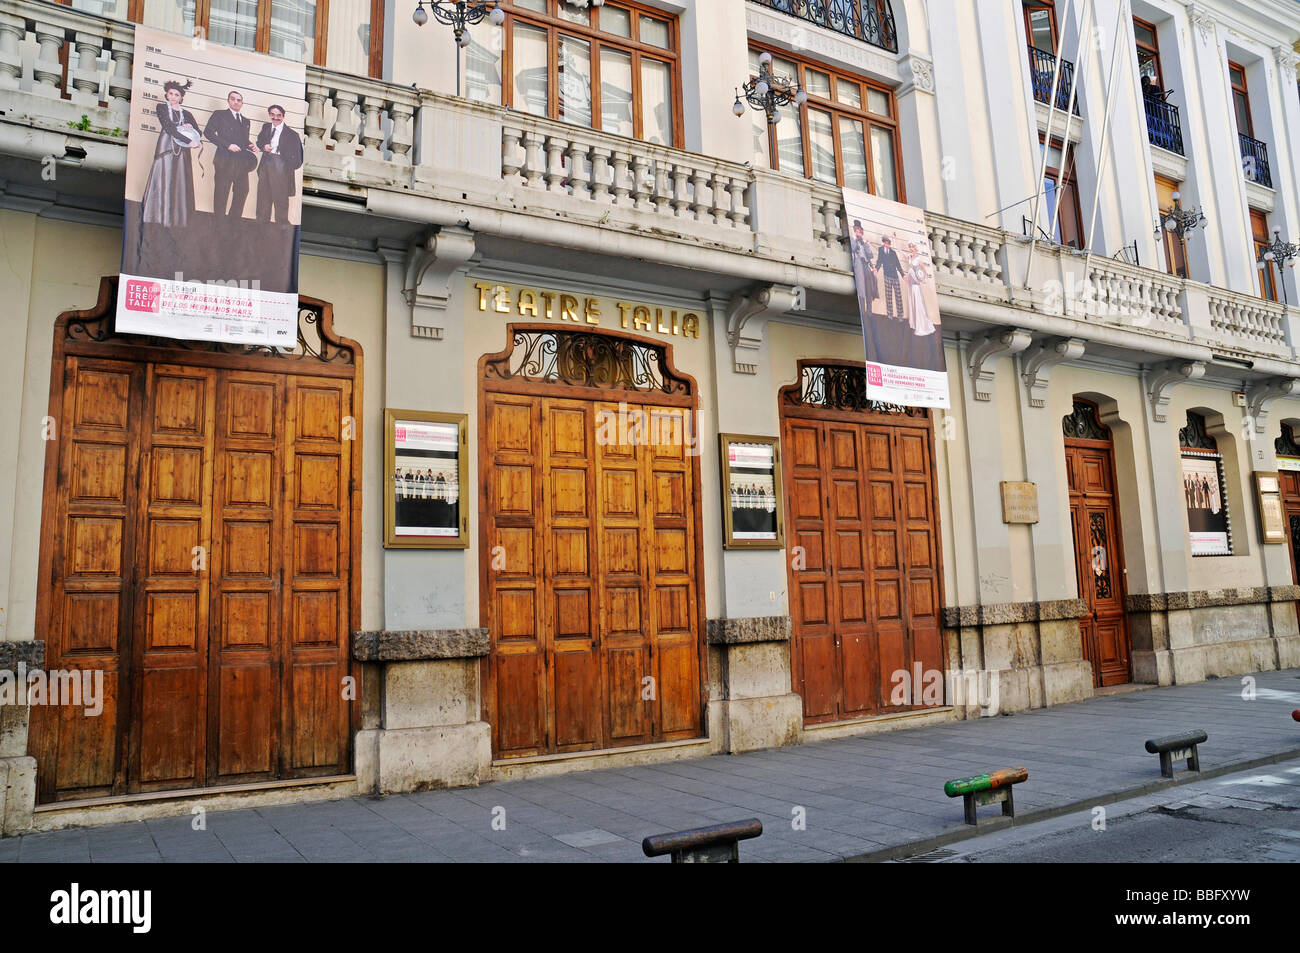 Teatro Talia, theater, Casa de los Obreros, San Vicente Ferrer, Barrio El Carmen district, Valencia, Spain, Europe Stock Photo